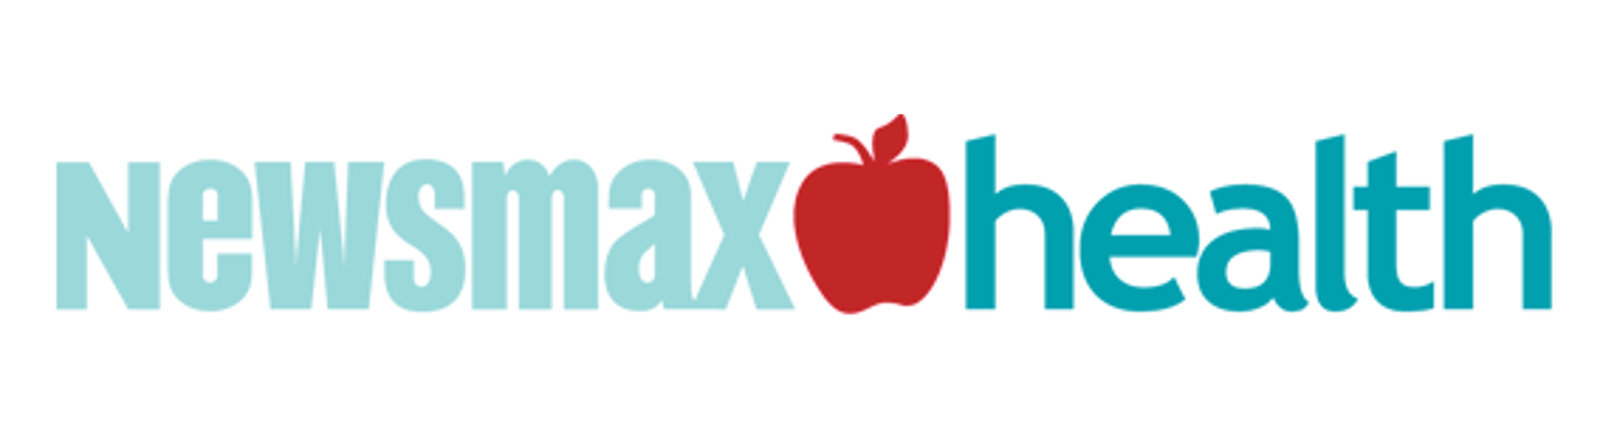 newsmax-health